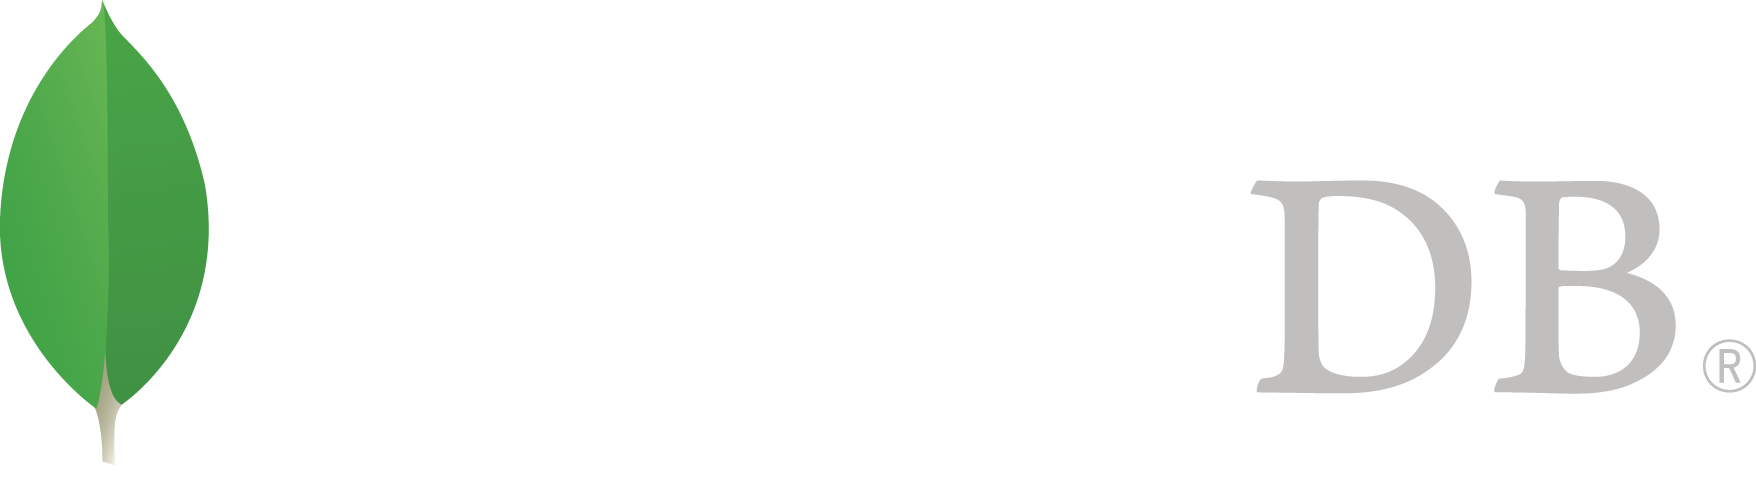 mongodb logo Anything but the